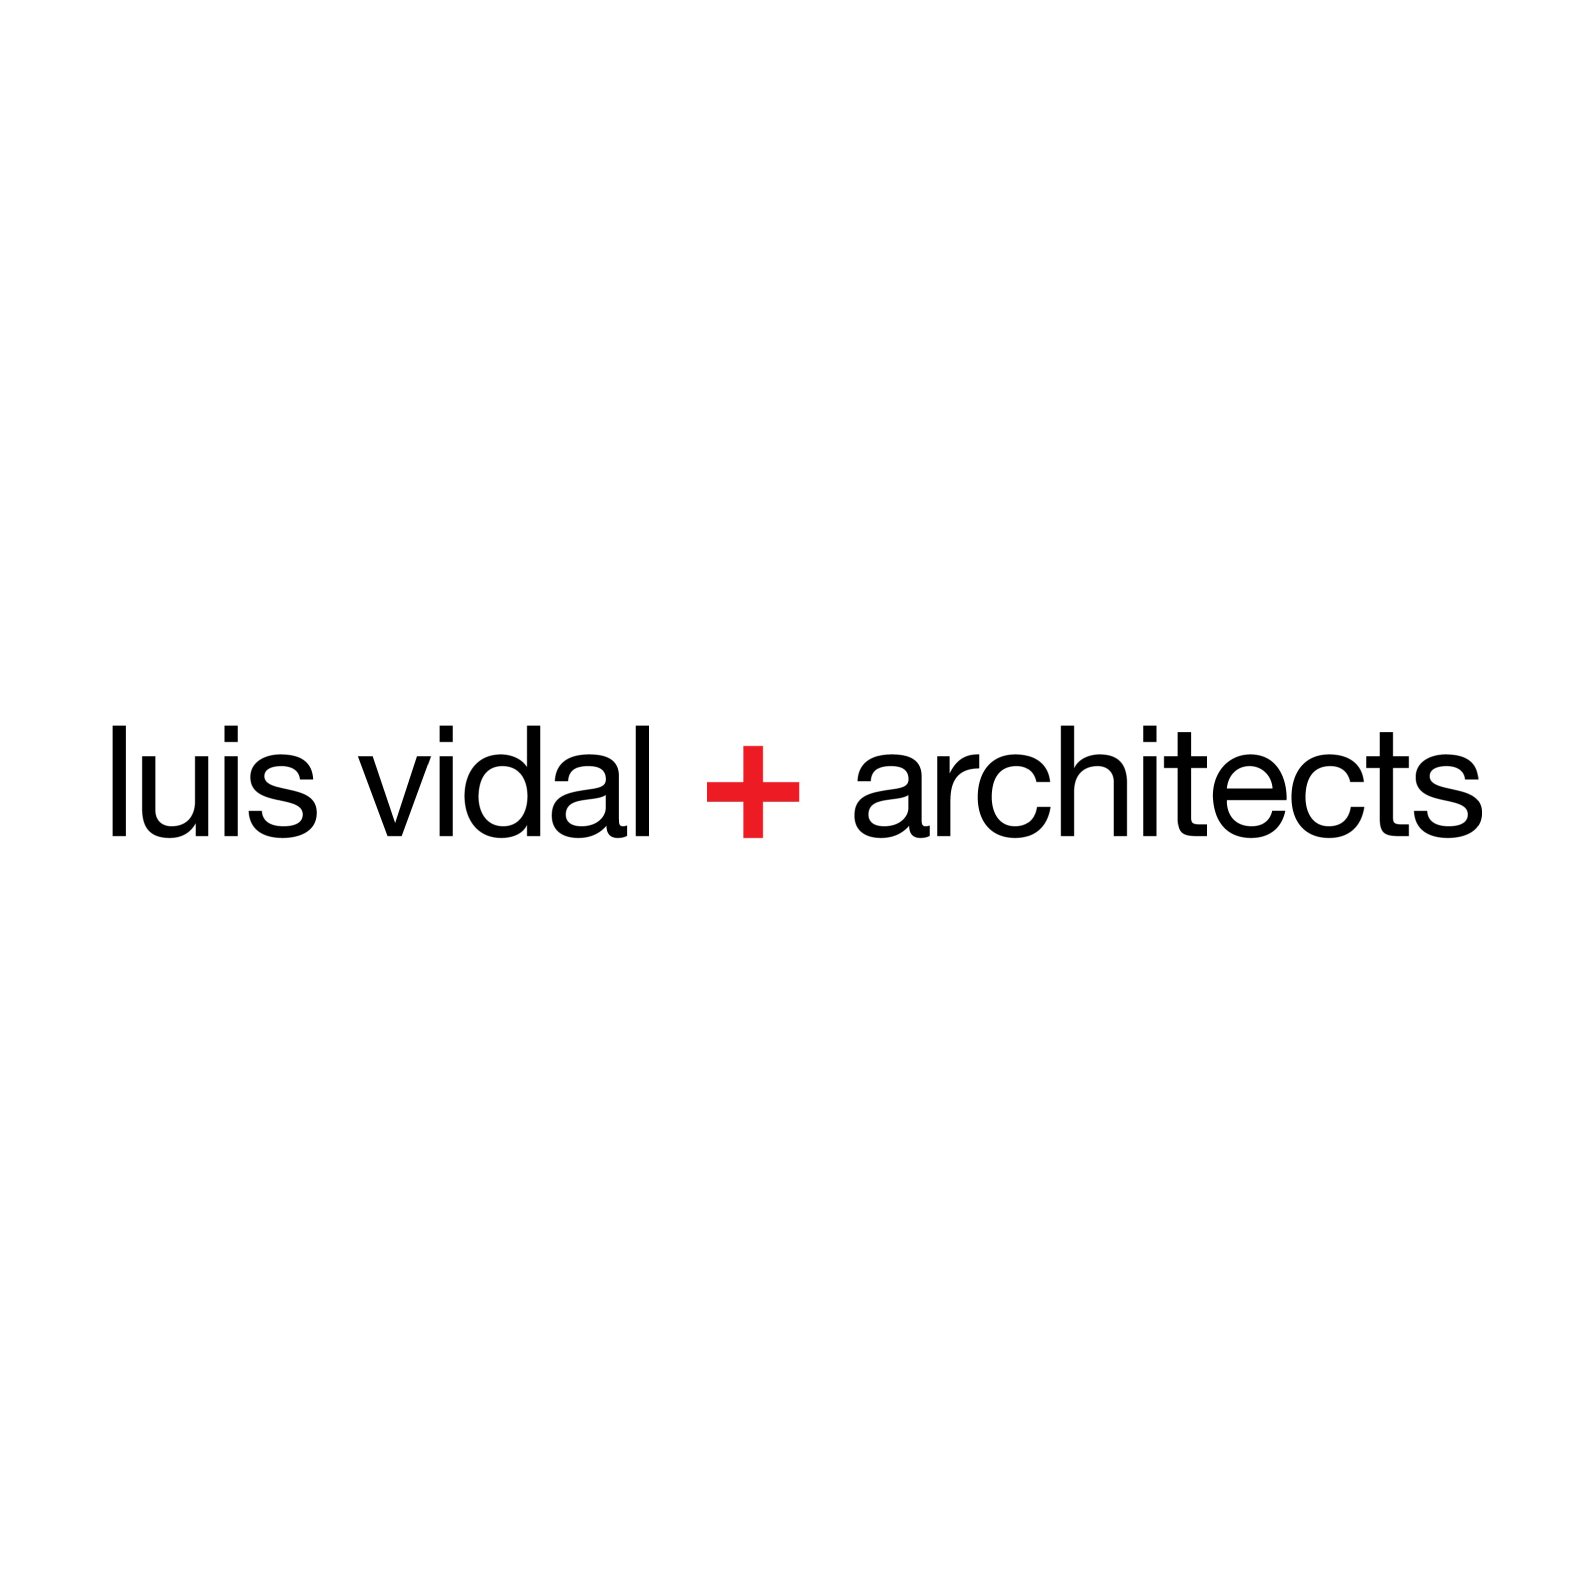 luis vidal + architects